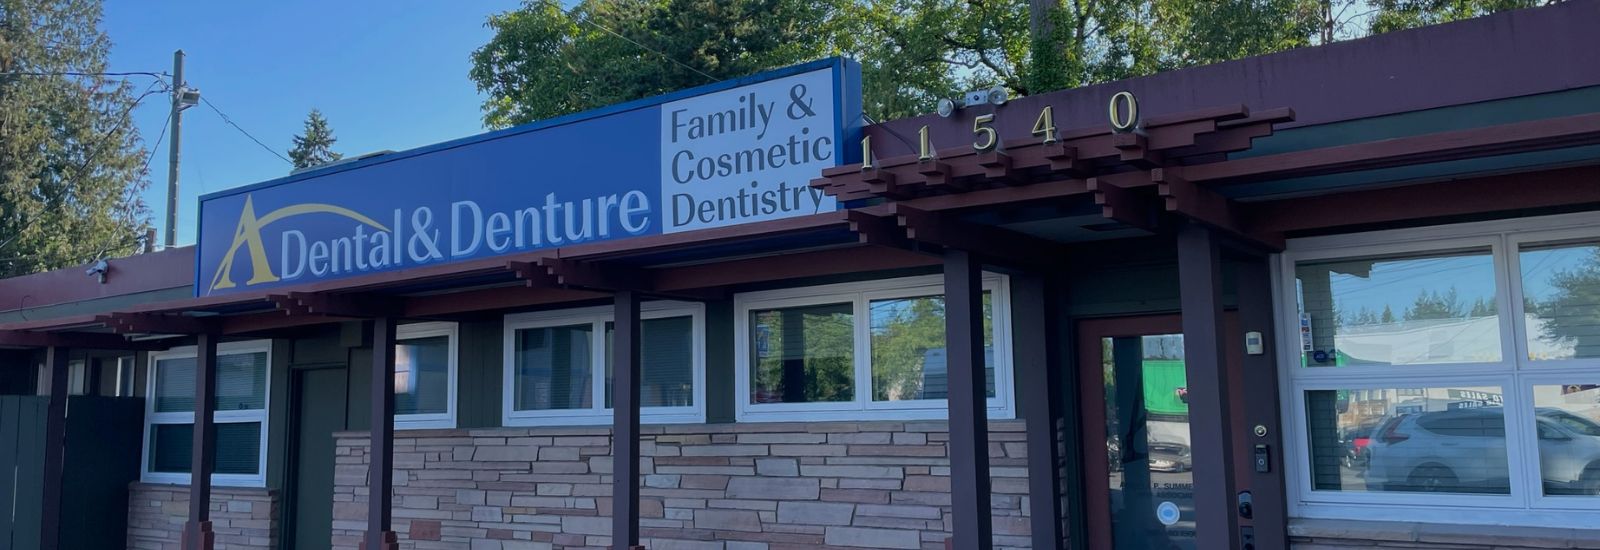 A Dental & Denture office front